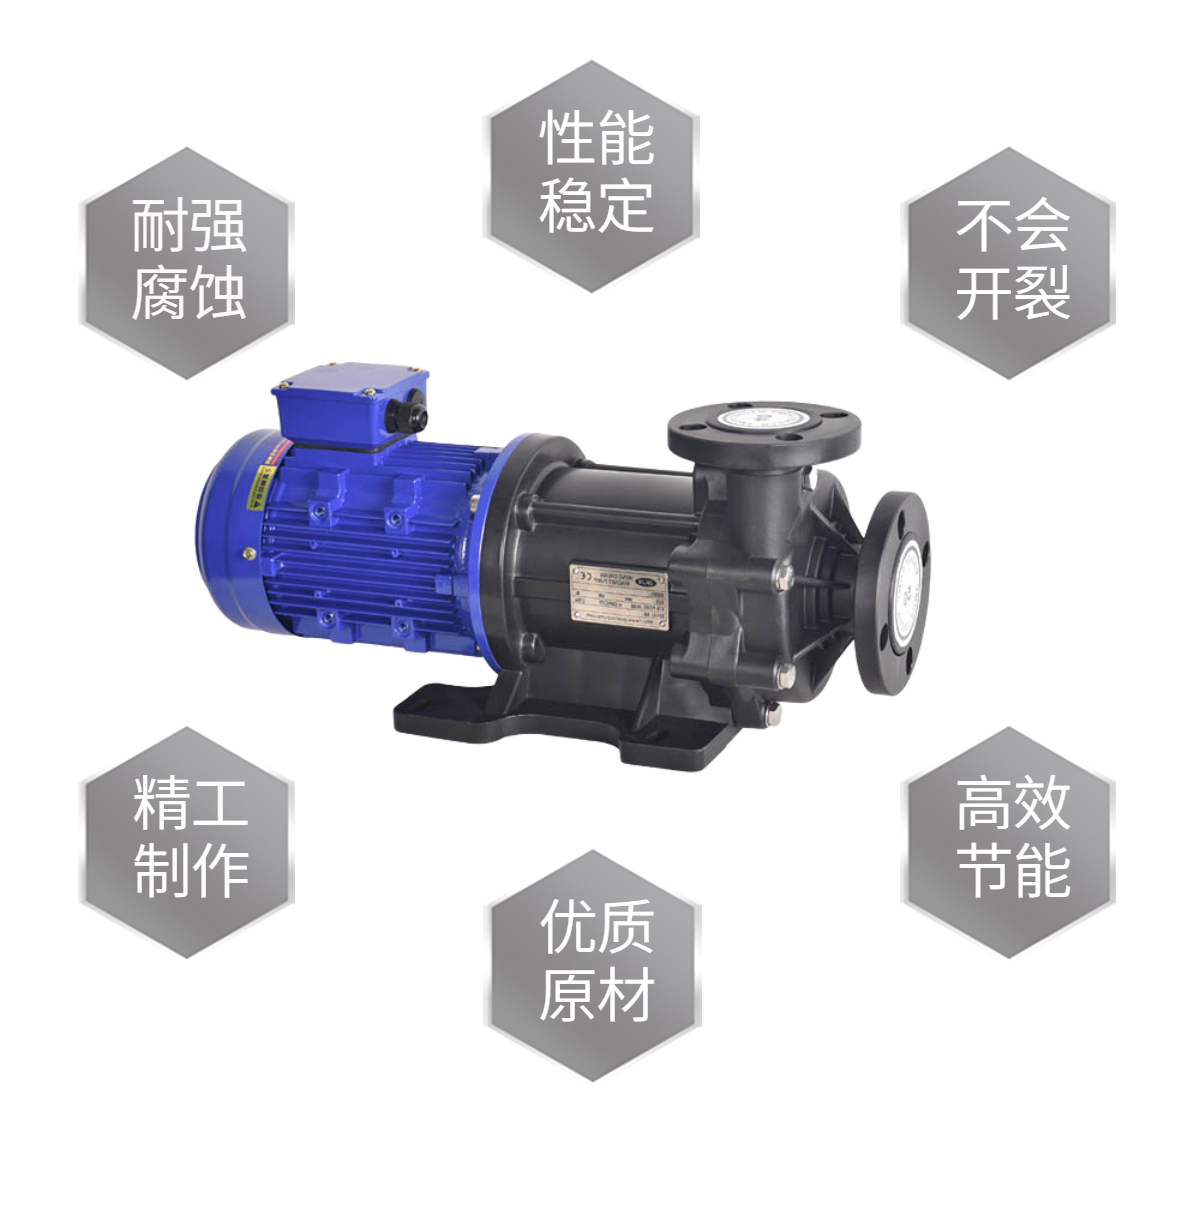 GY-400PW耐酸碱磁力泵 耐腐蚀输送磁力驱动泵